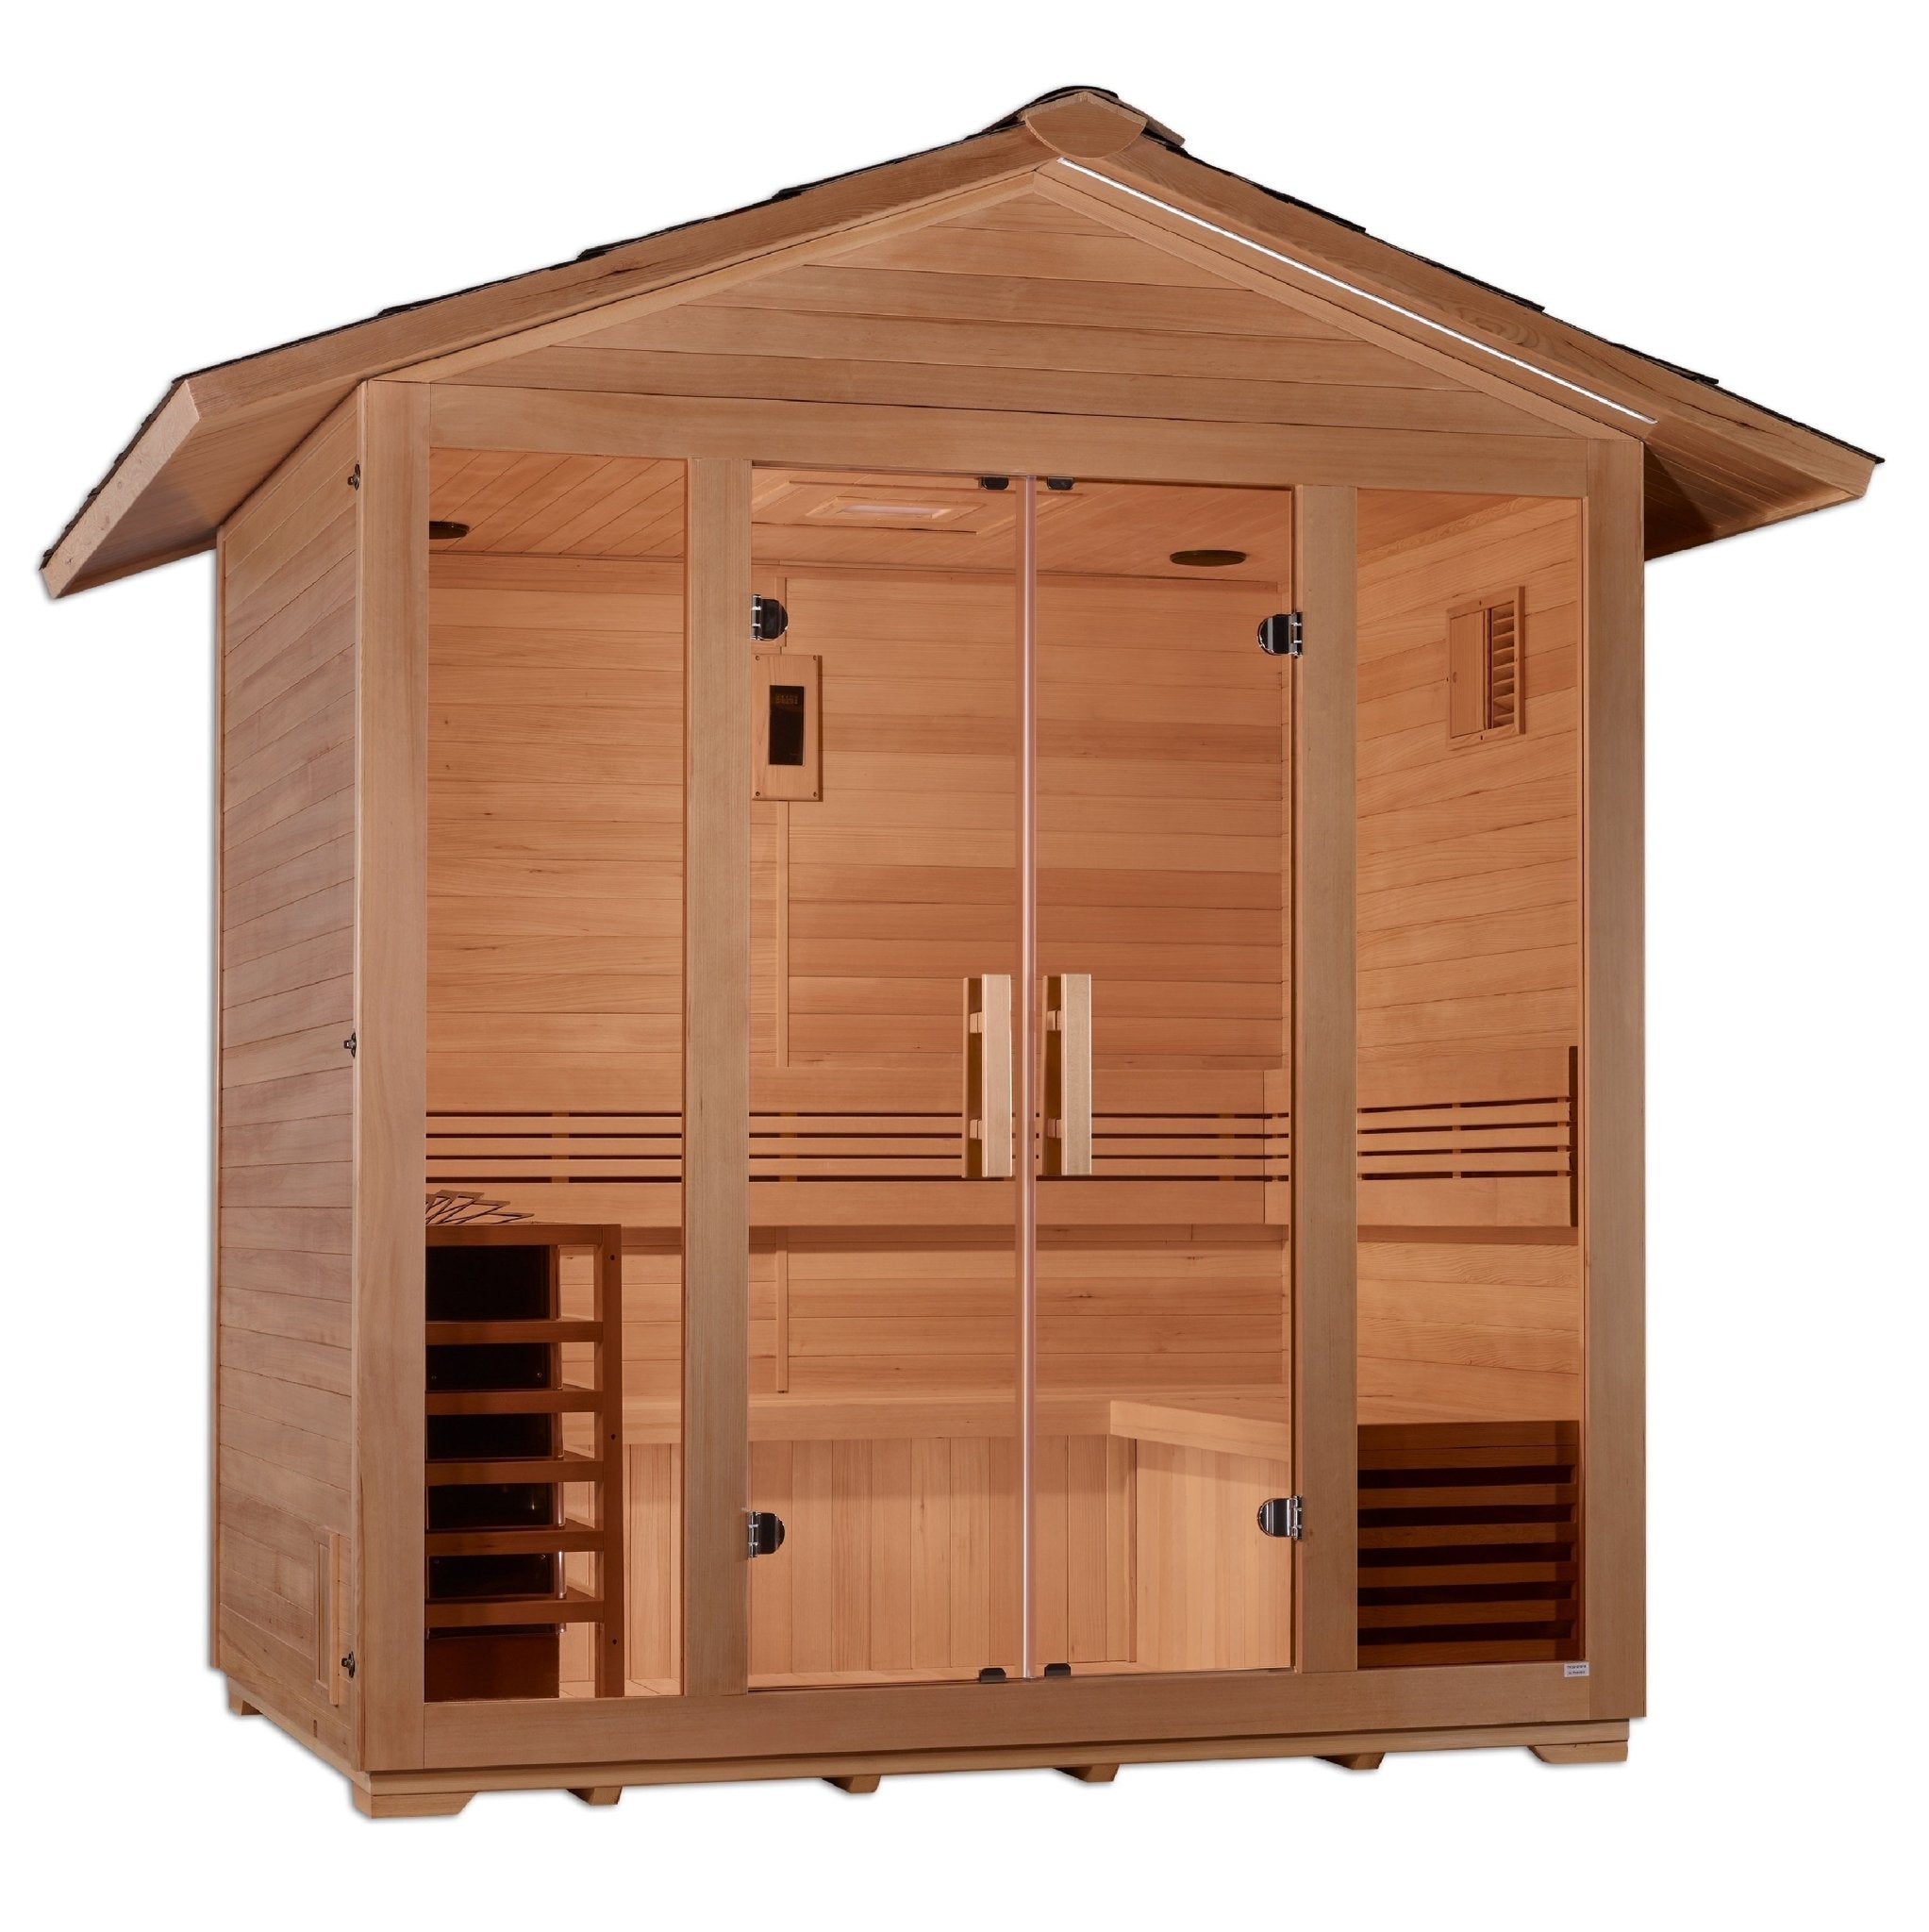 Golden Designs "Vorarlberg" 5 Person Traditional Outdoor Sauna - Canadian Hemlock - The Sauna World